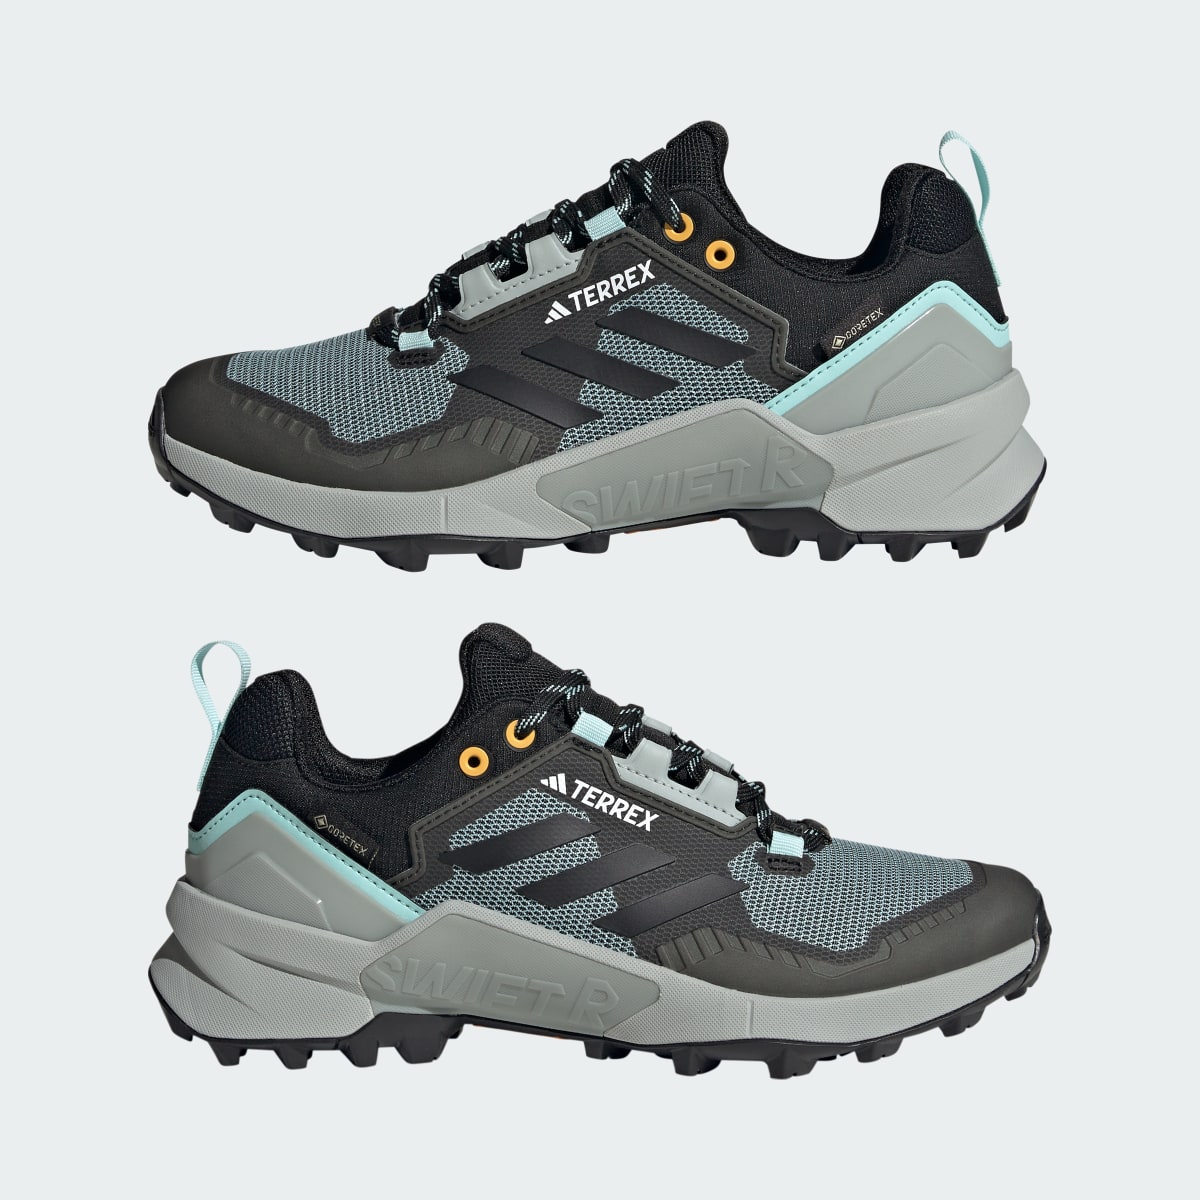 Adidas TERREX Swift R3 GORE-TEX Hiking Shoes. 9